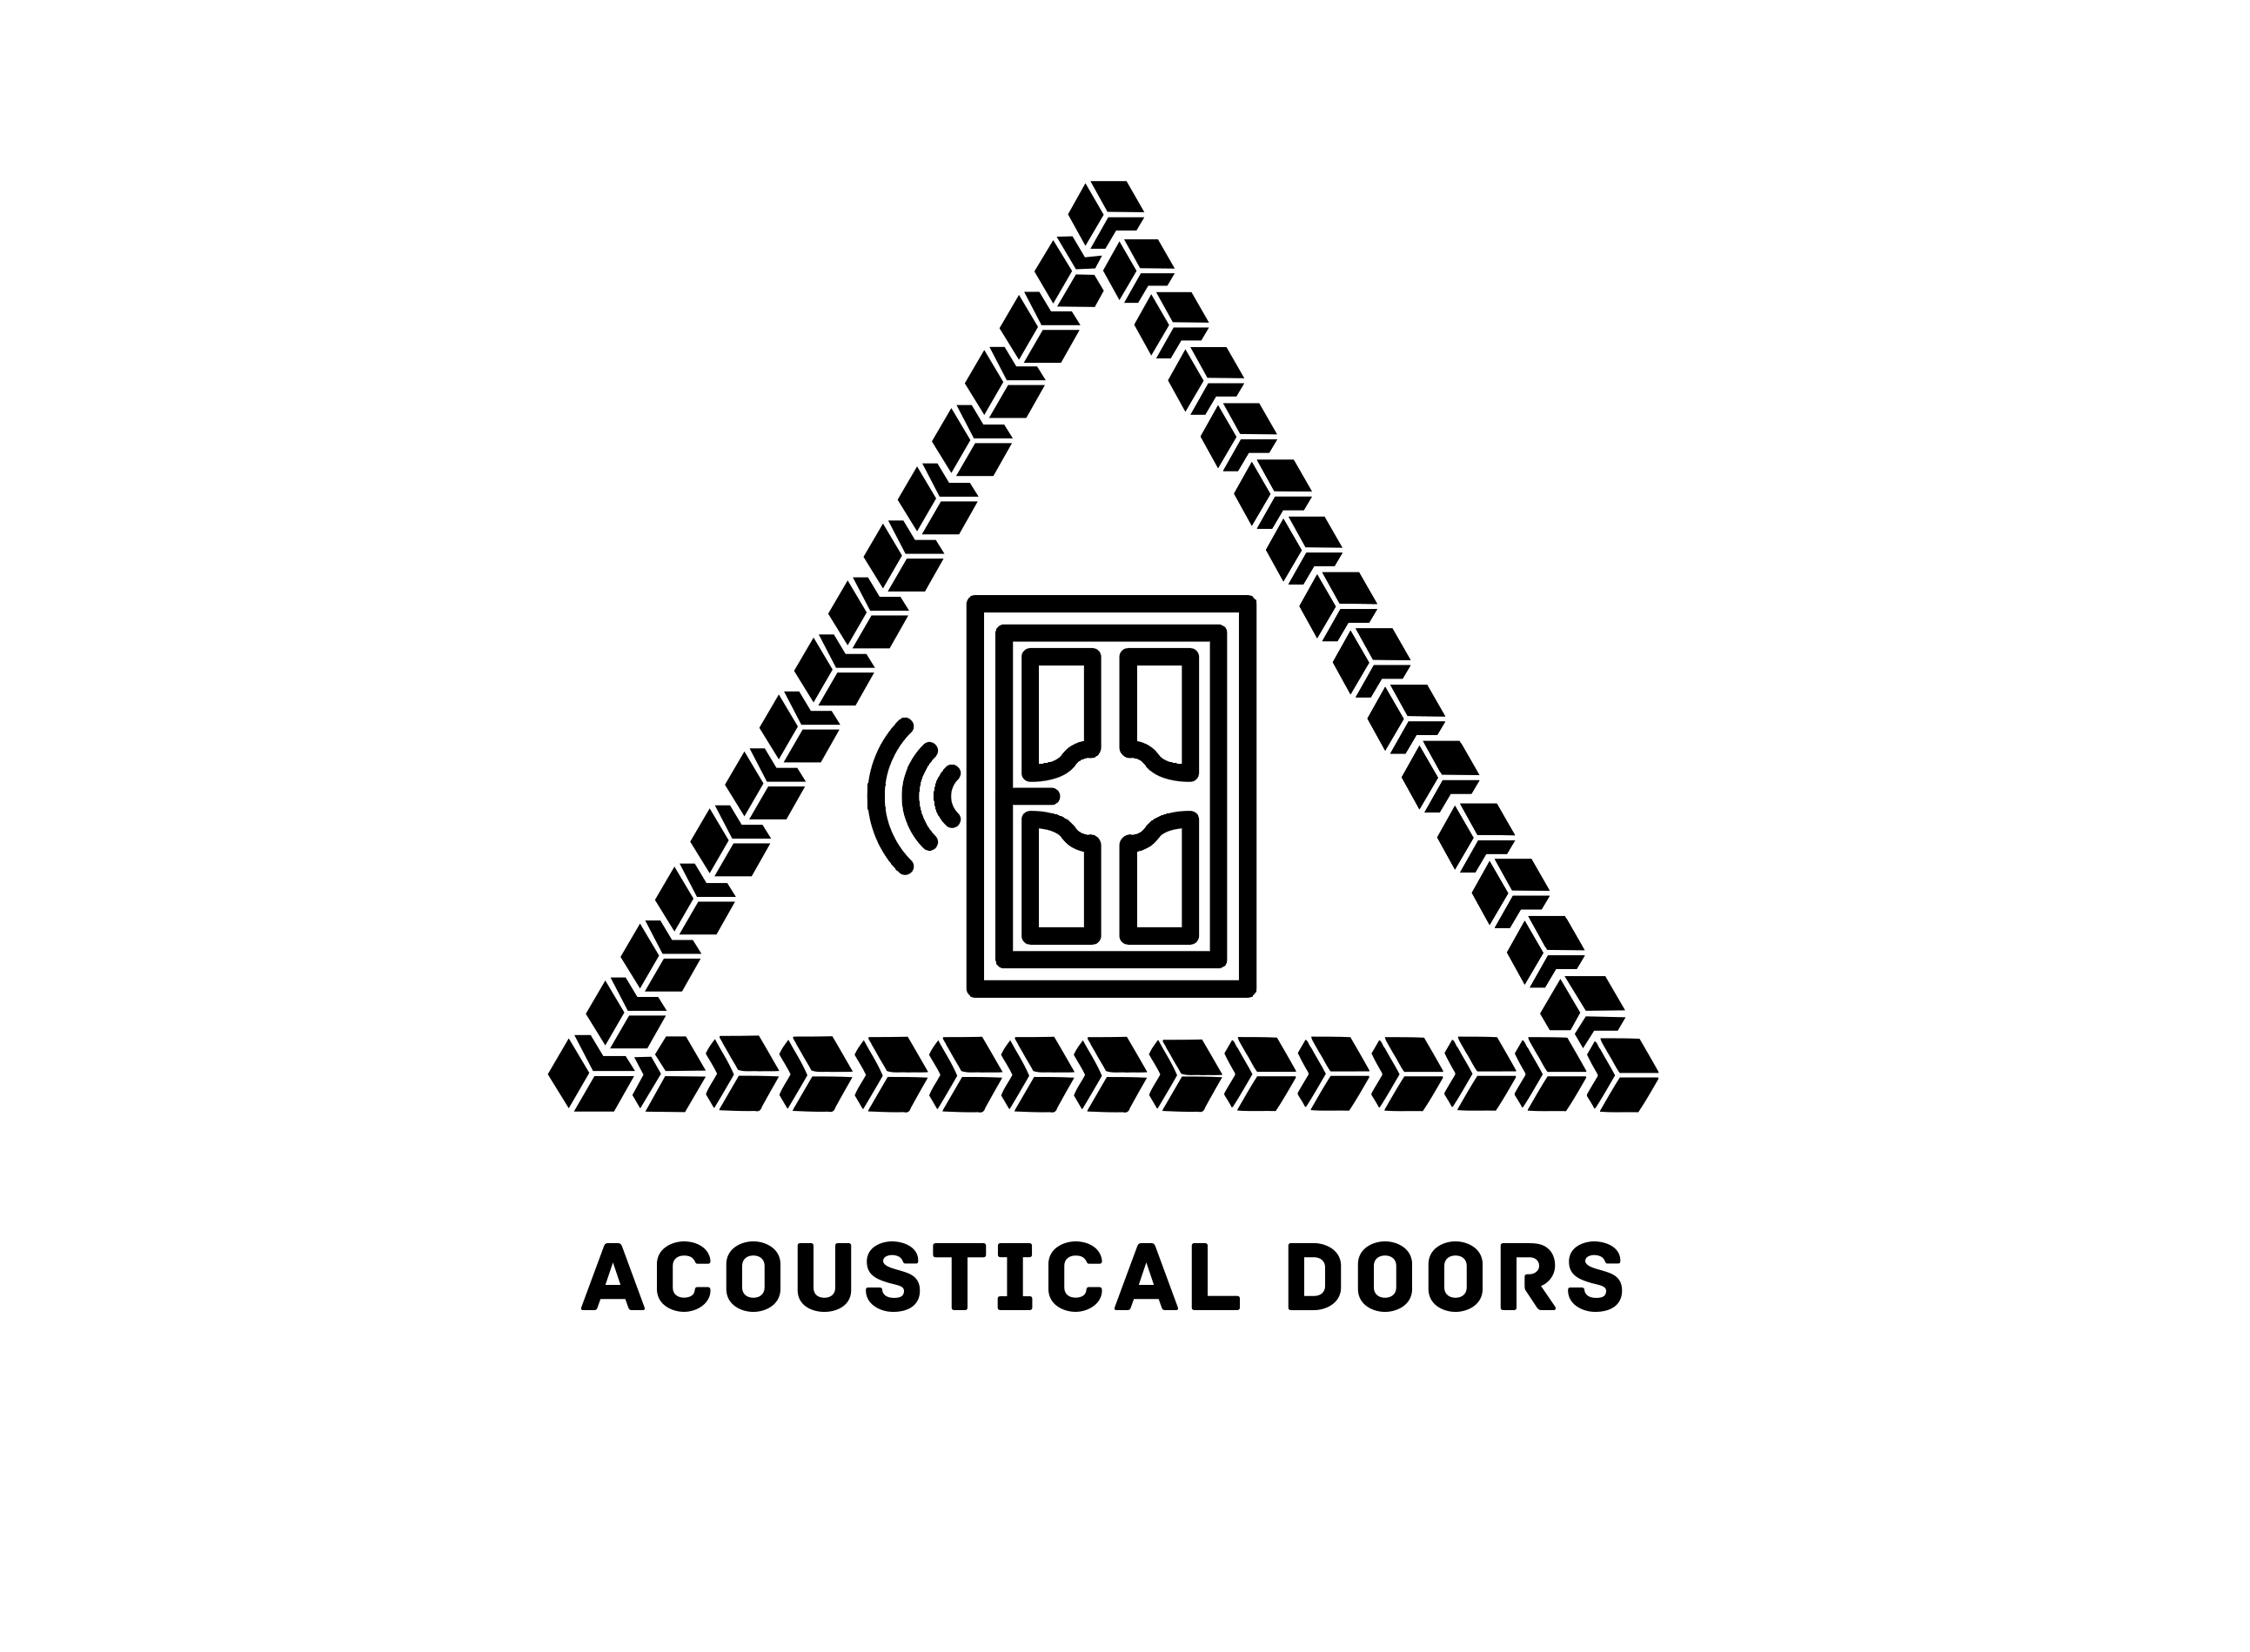 ACOUSTICAL DOORS